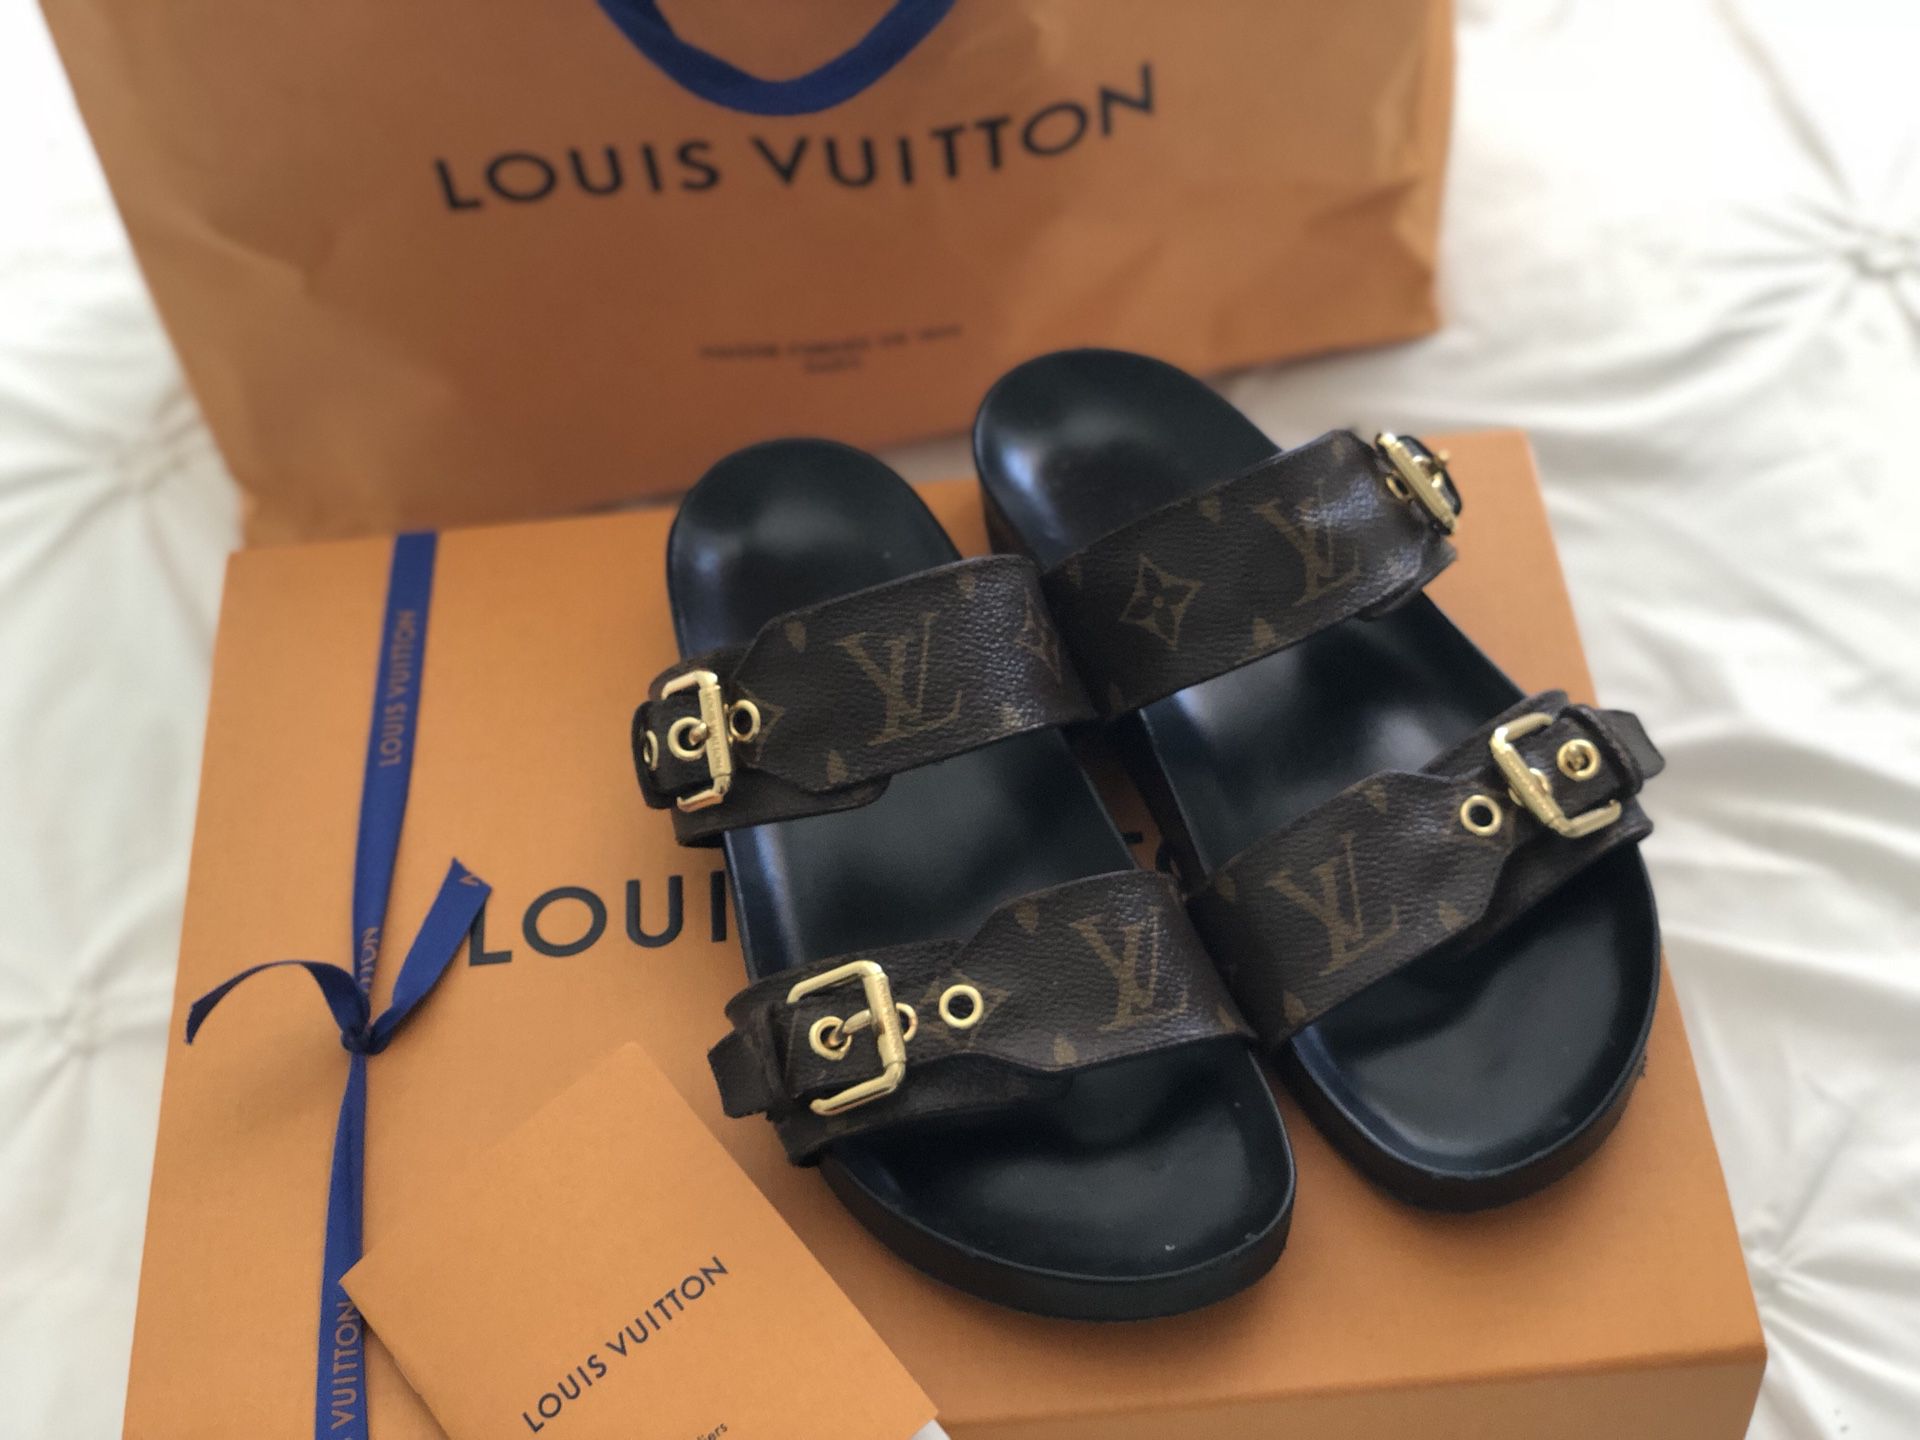 Louis Vuitton Bom Dia Flat Comfort Mule for Sale in Morrow, GA - OfferUp